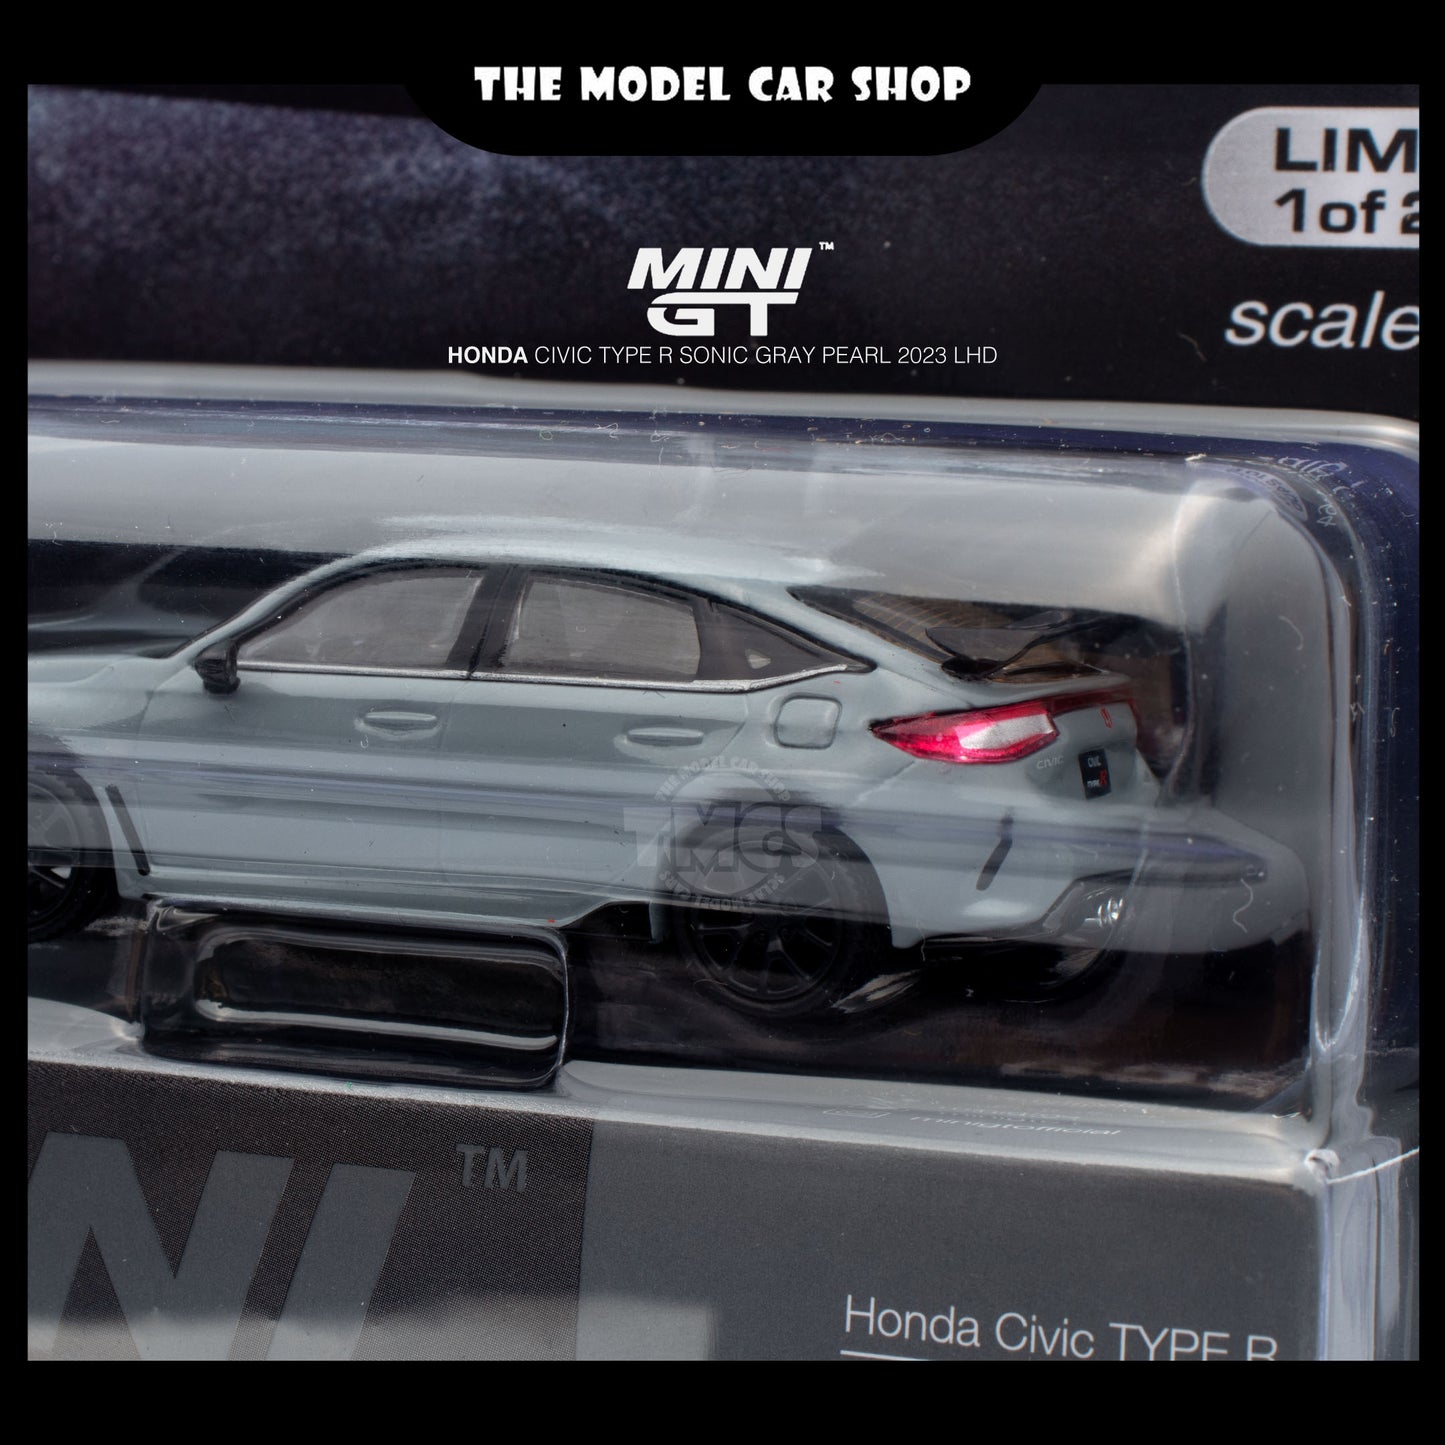 [MINI GT] Honda Civic Type R - Sonic Gray Pearl 2023 (Mijo Exclusive)